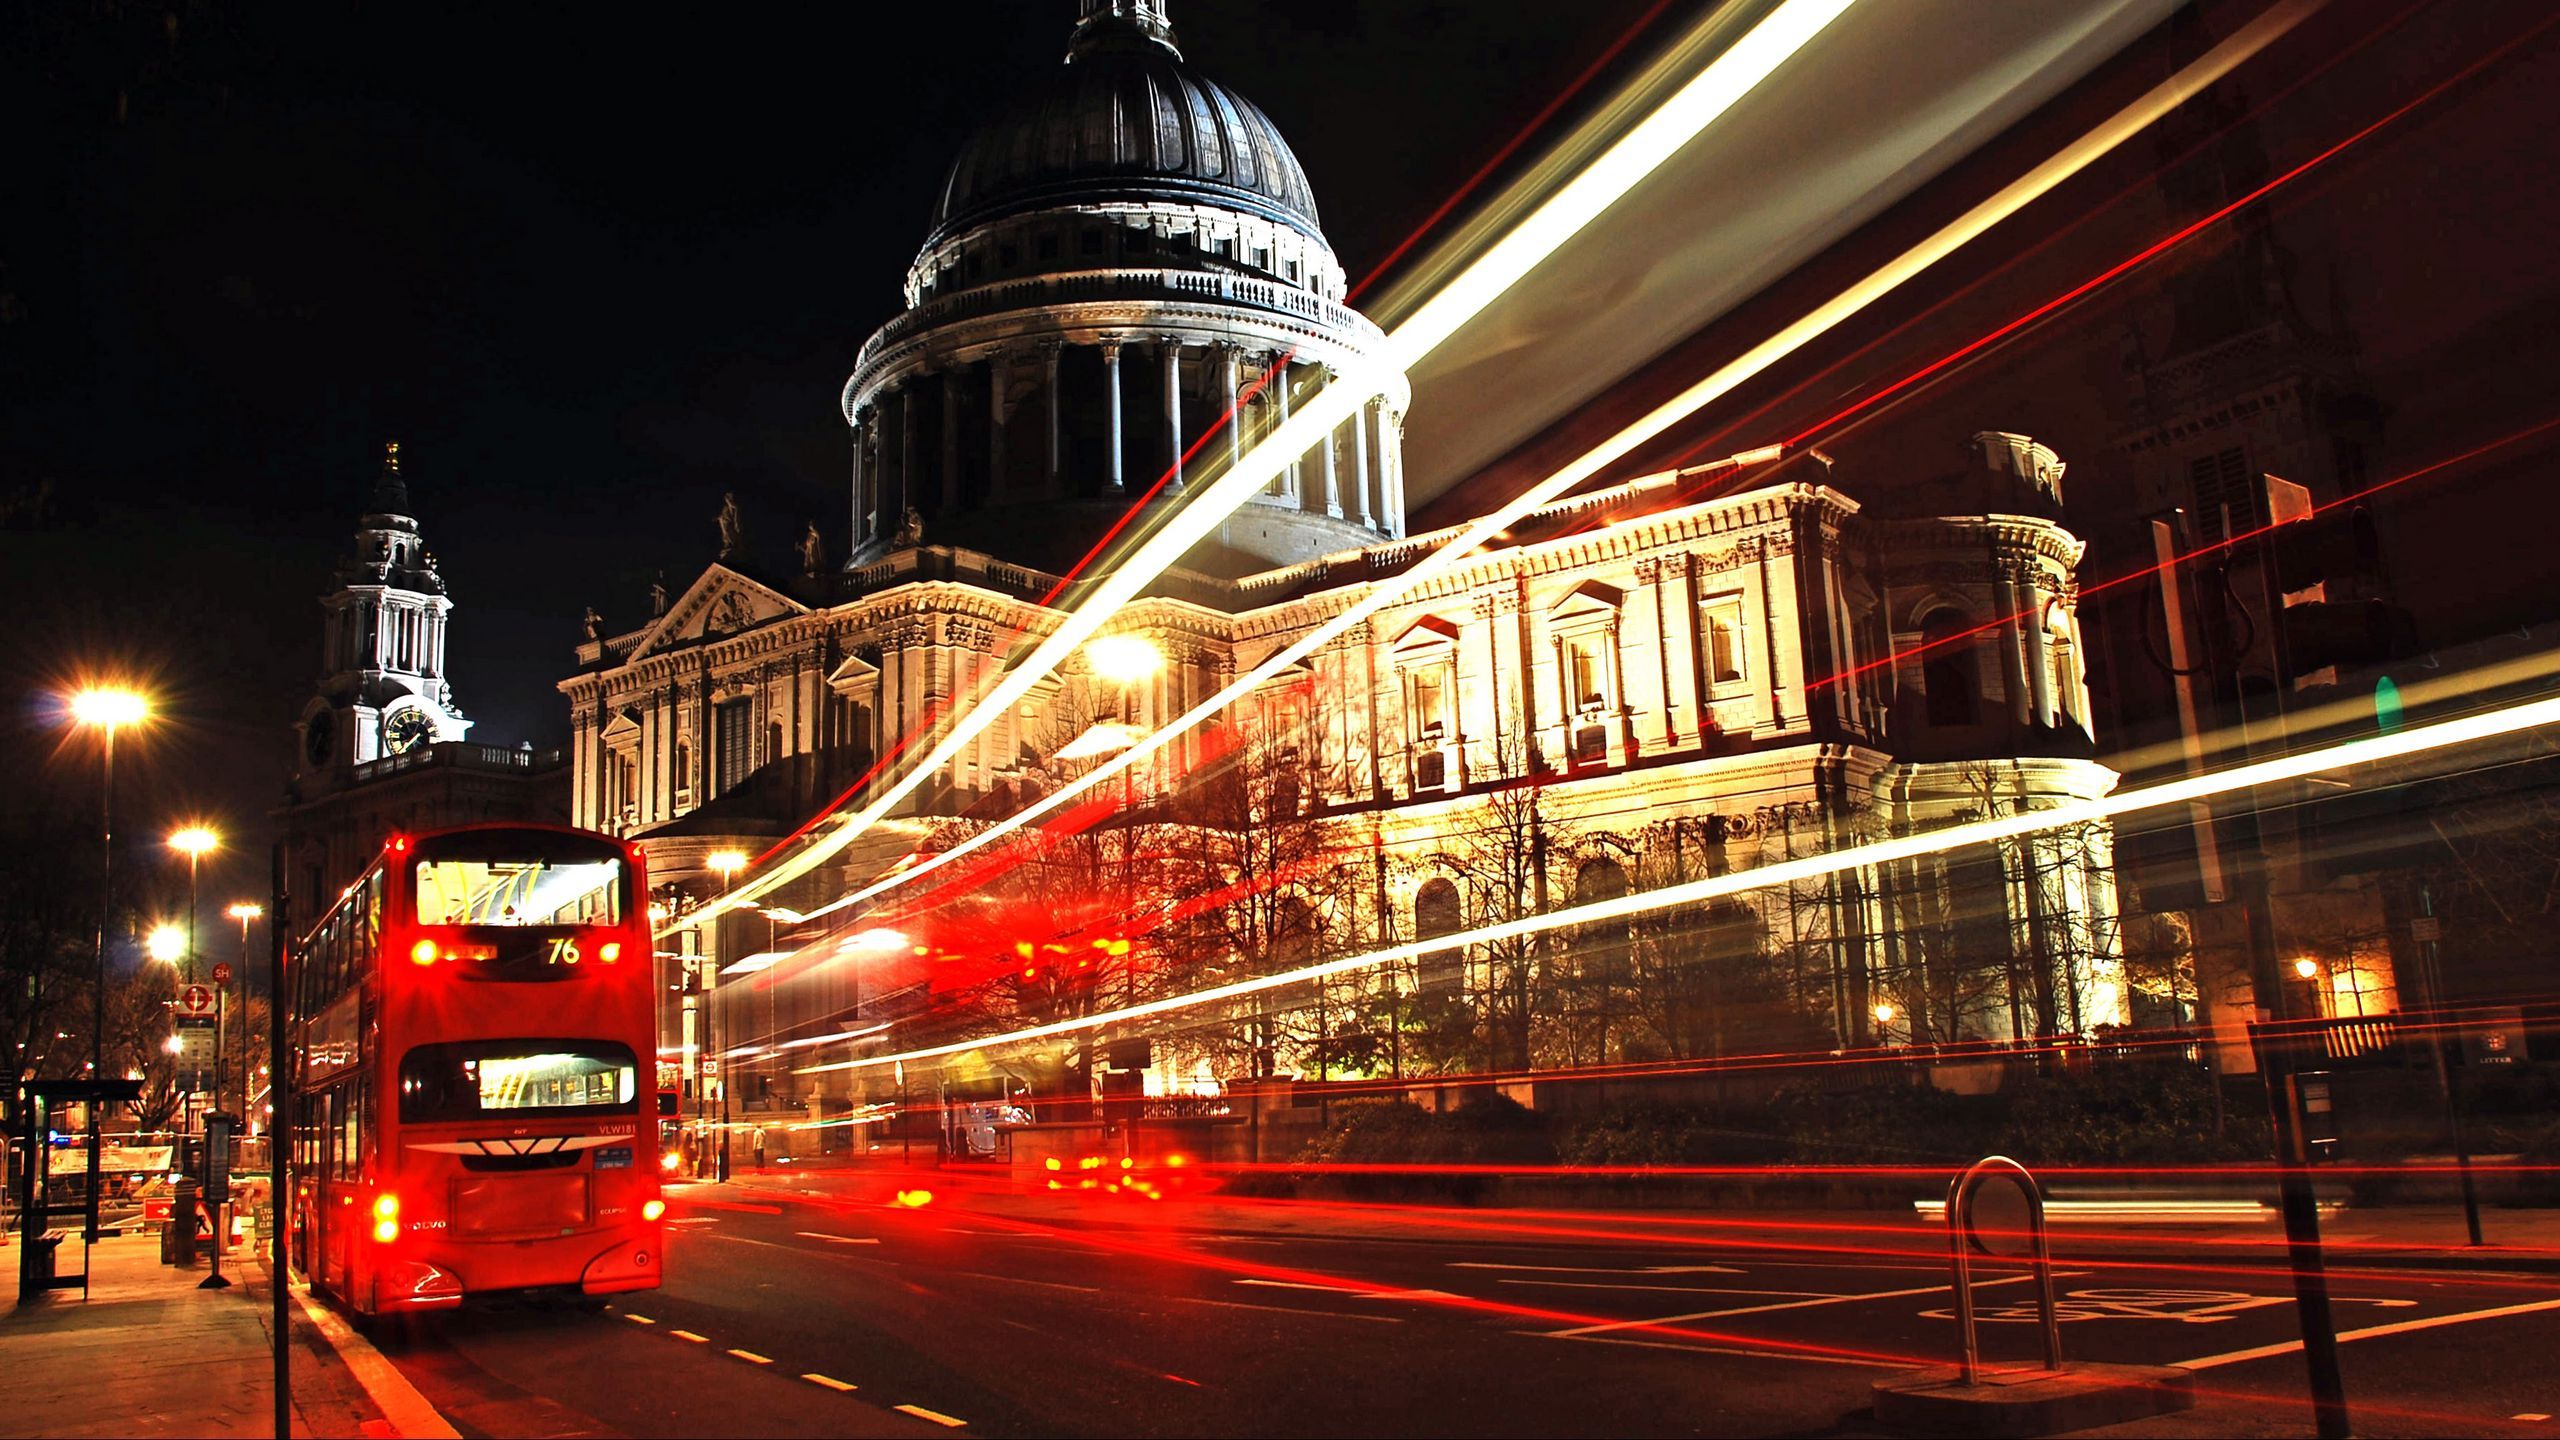 Download wallpaper 2560x1440 london, city, bus, night widescreen 16:9 HD background